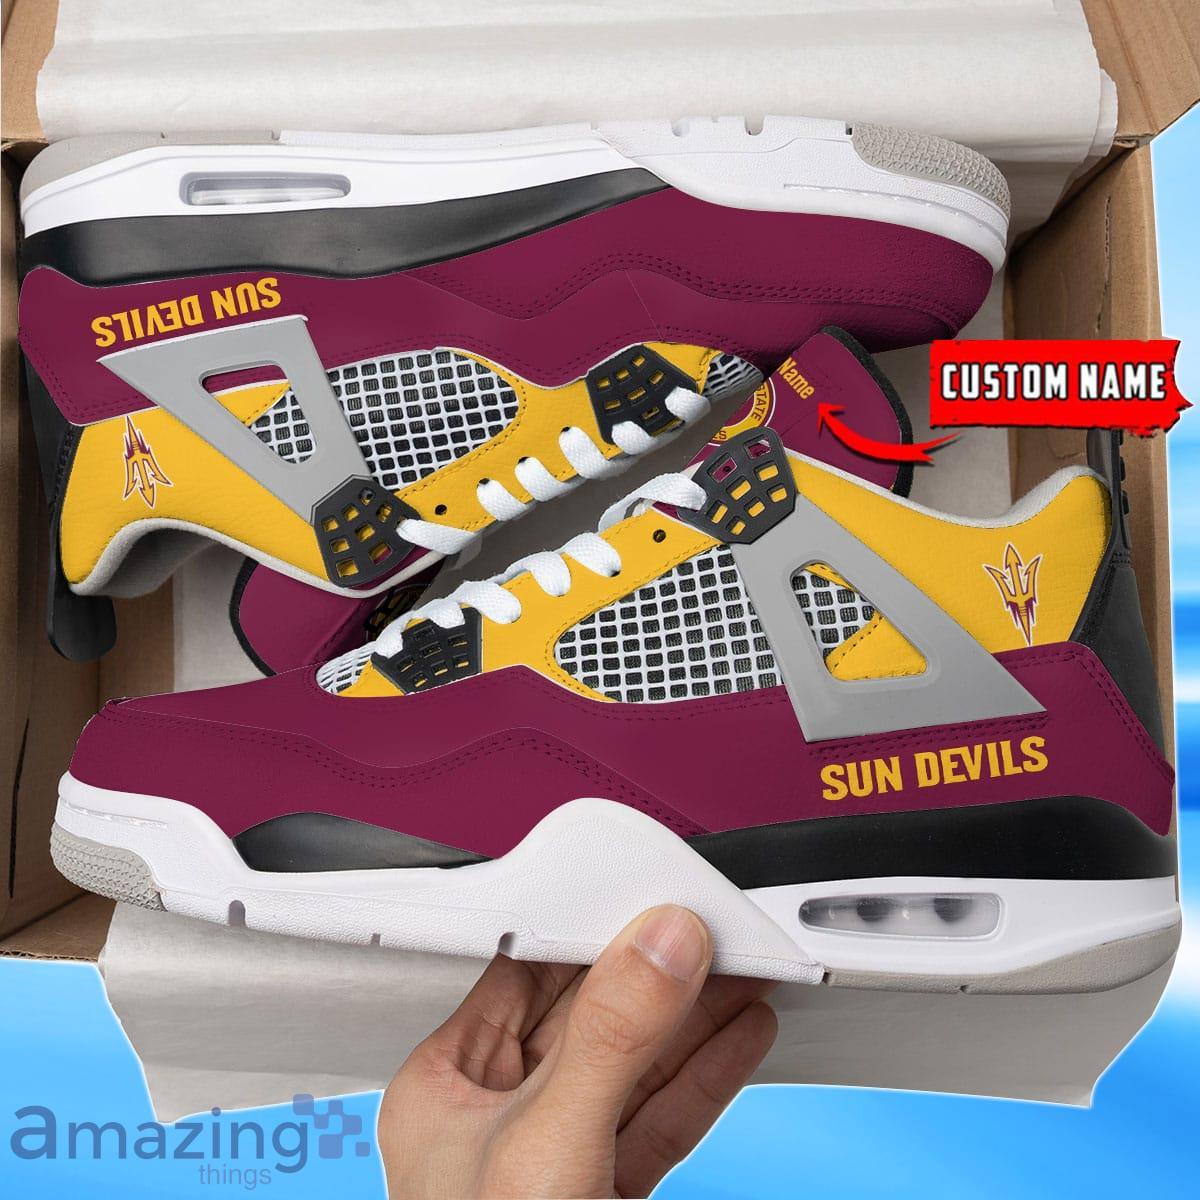 Arizona State Sun Devils Custom Name Air Jordan 4 Shoes Impressive Gift For Men Women Product Photo 1